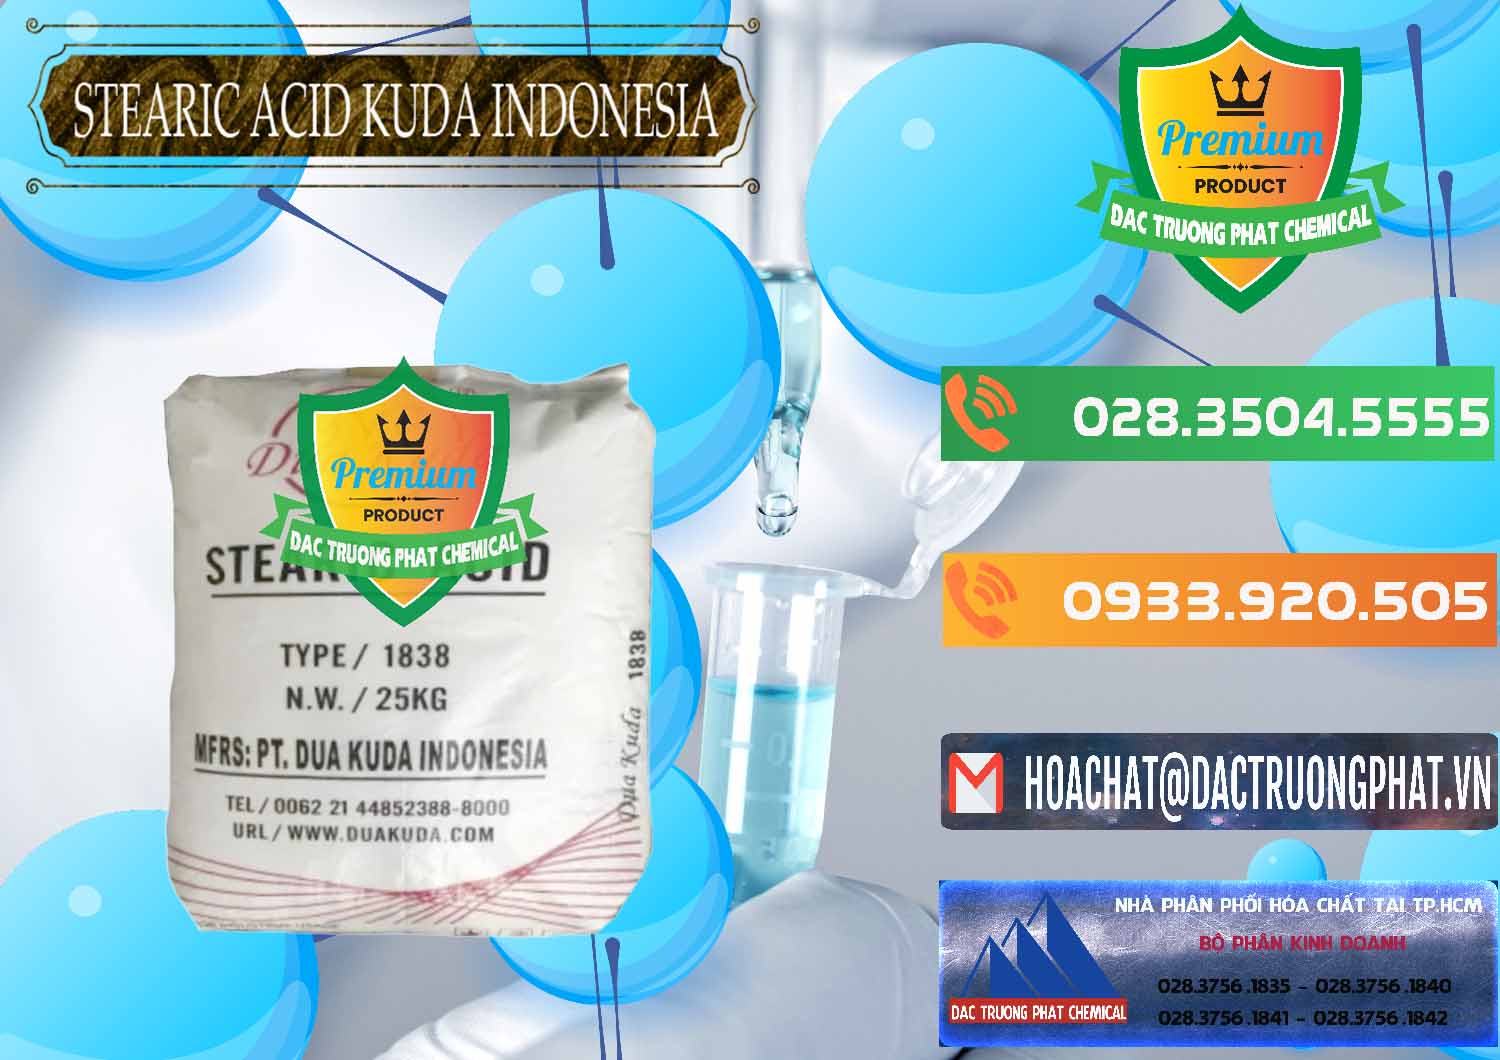 Cty cung cấp & bán Axit Stearic - Stearic Acid Dua Kuda Indonesia - 0388 - Kinh doanh - cung cấp hóa chất tại TP.HCM - hoachatxulynuoc.com.vn